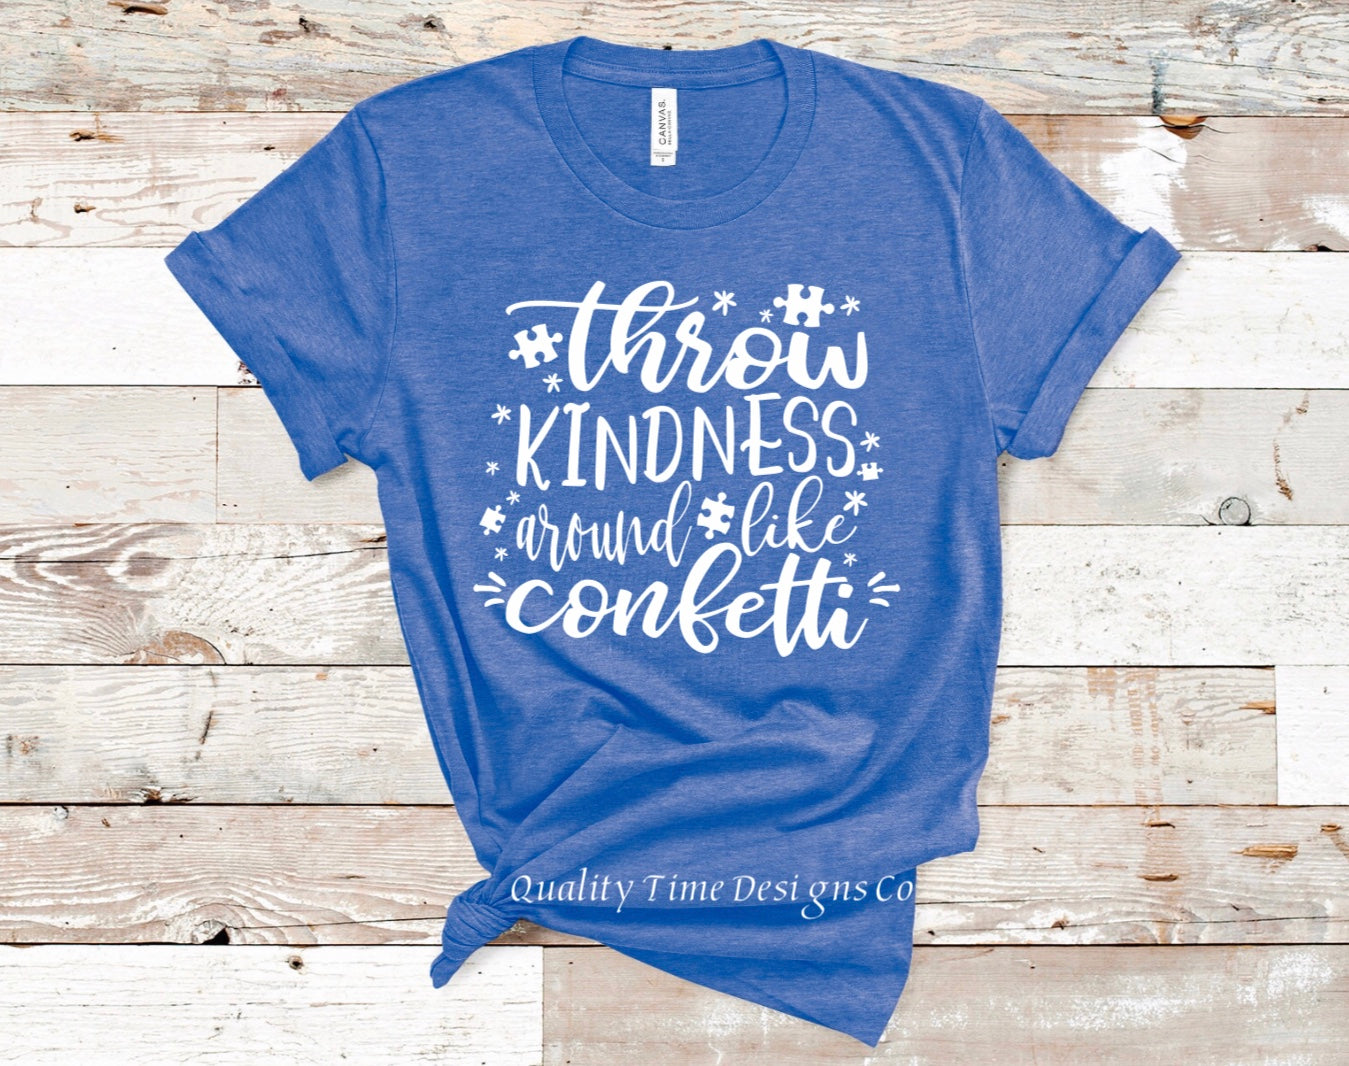 Throw kindness around like confetti autism awareness t shirt 